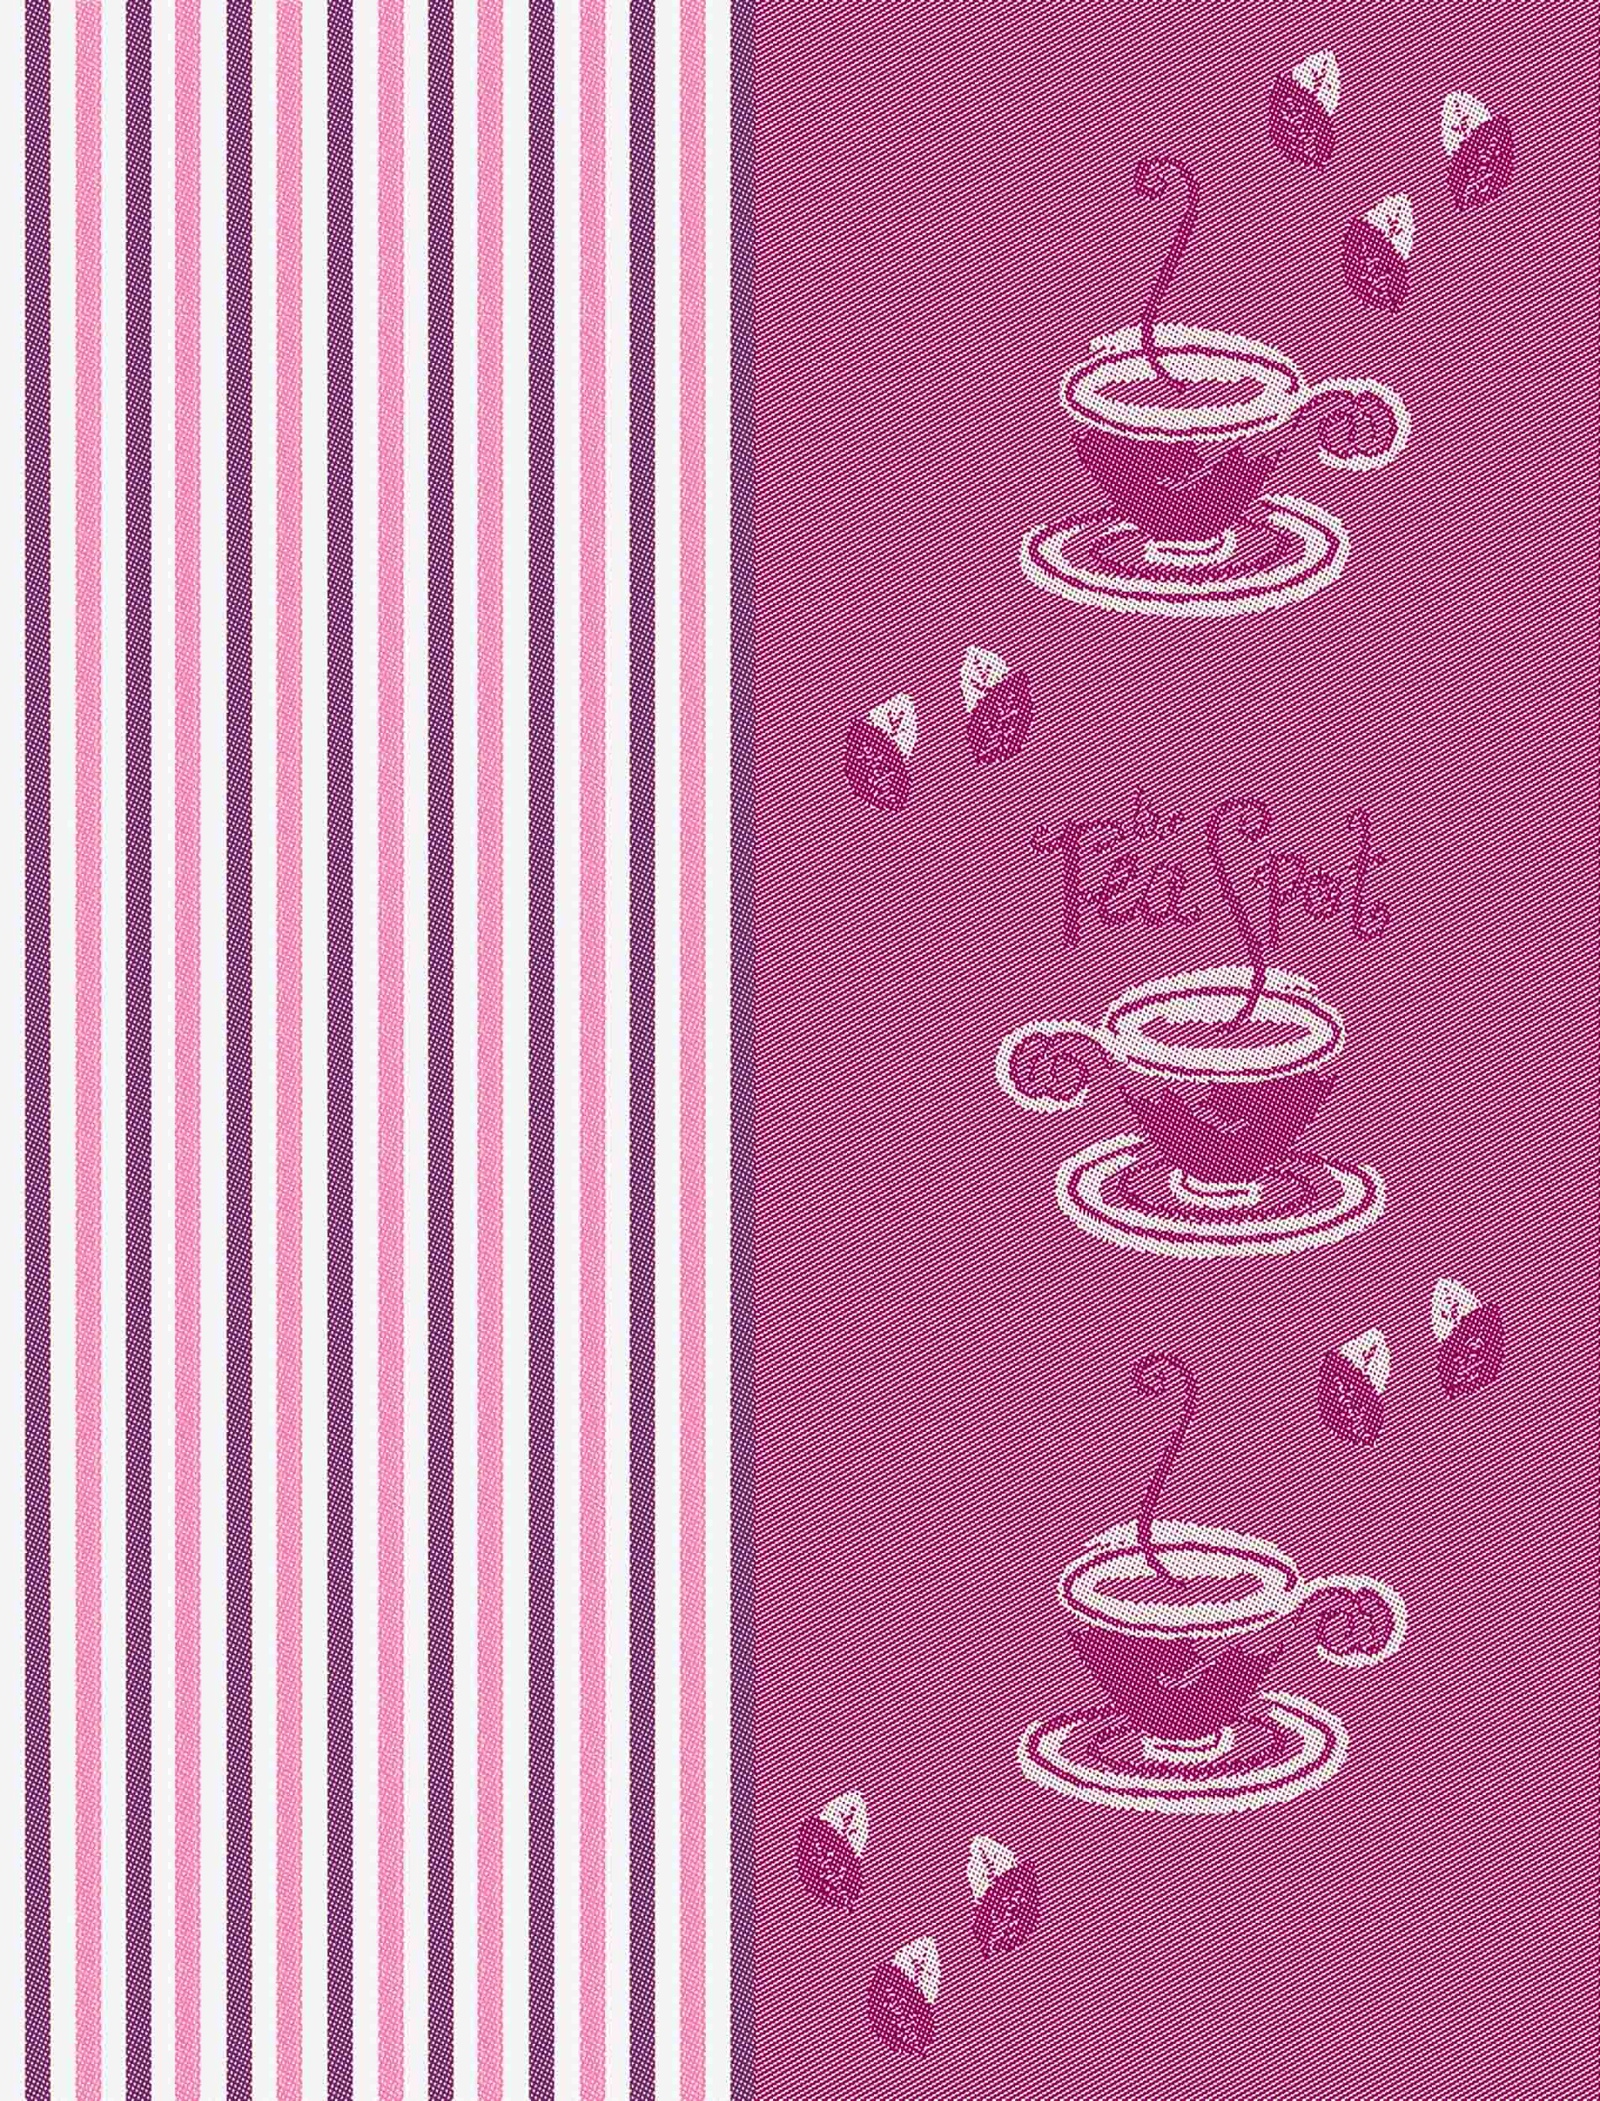 фото Полотенце кухонное ТекСтиль для дома 507061-5 TEA SPOT, фуксия, сиреневый, розовый